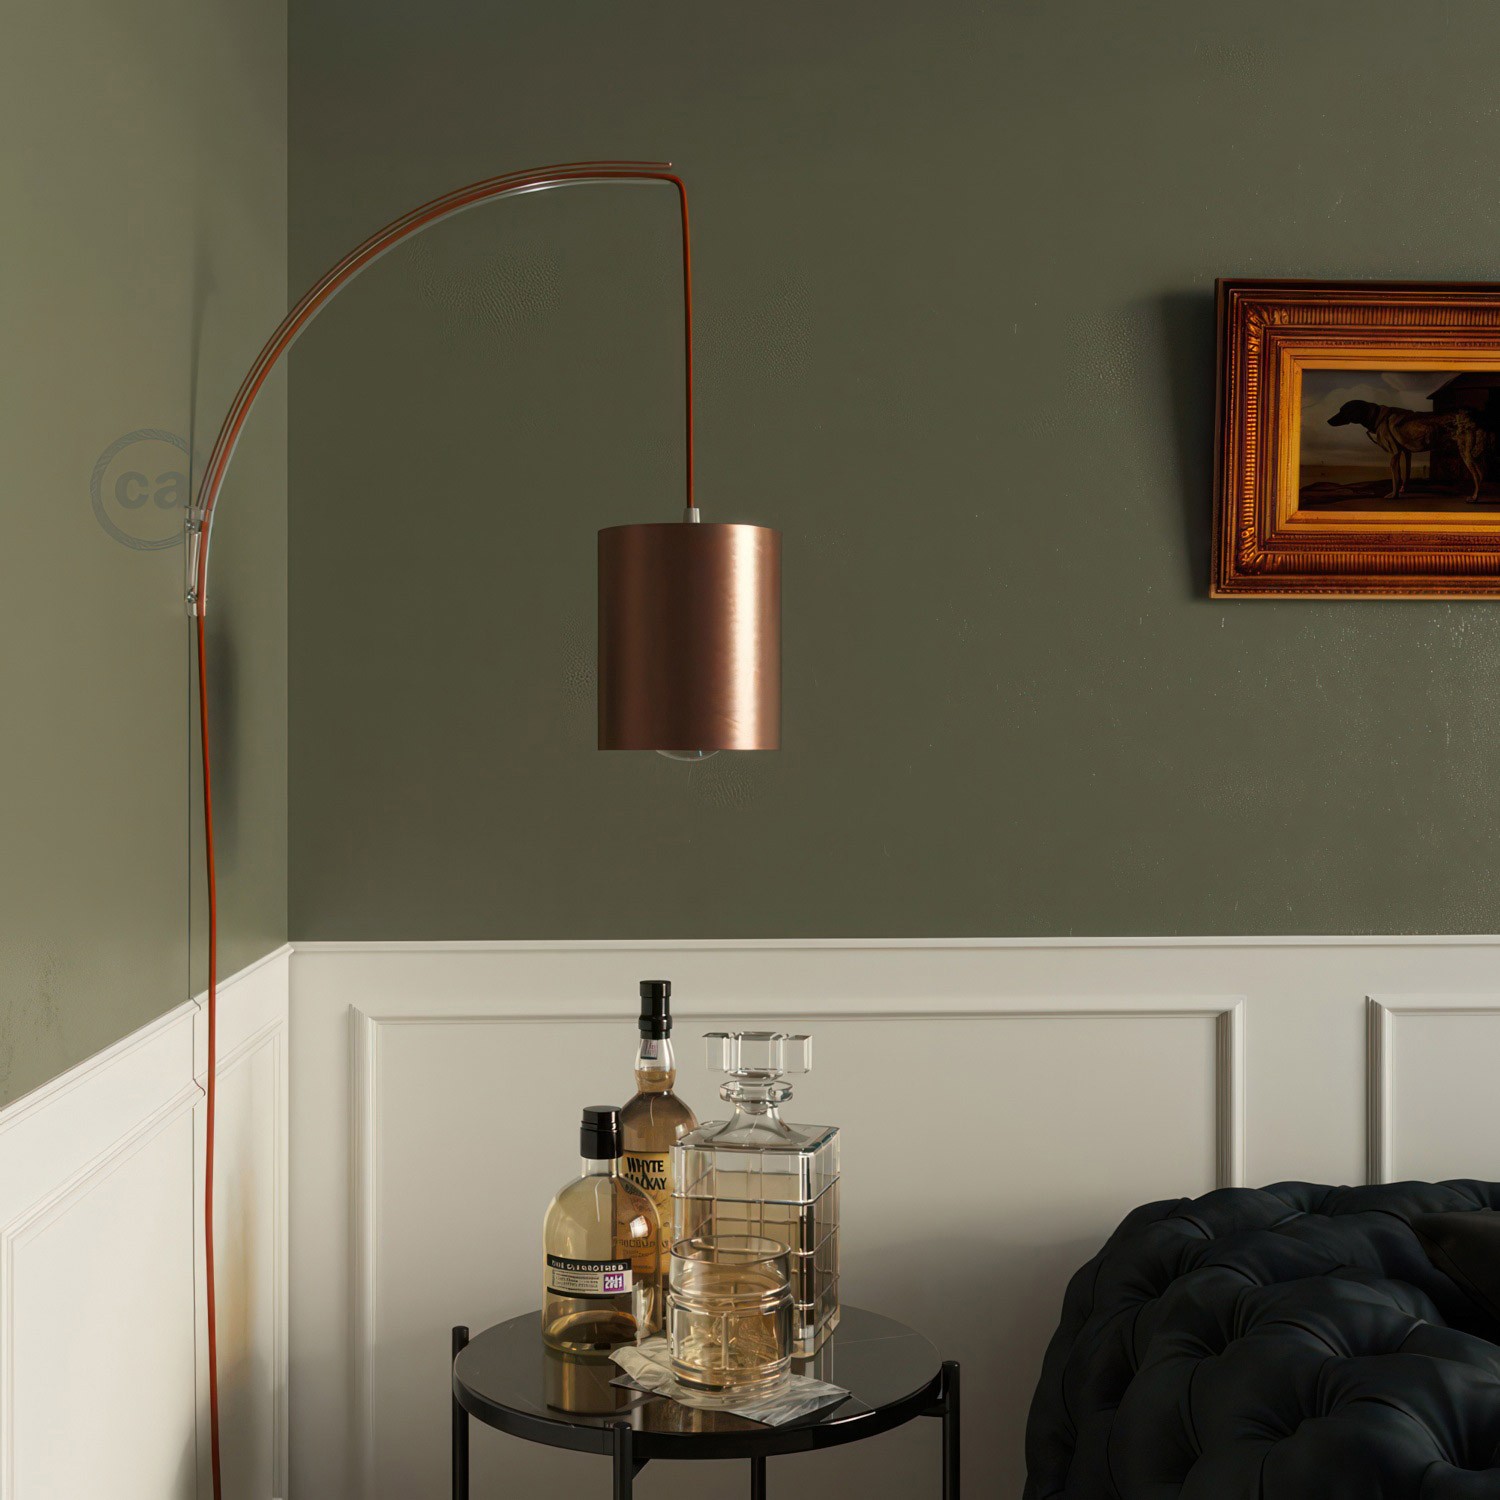 Archet(To), prozirni zidni držač za lampu.